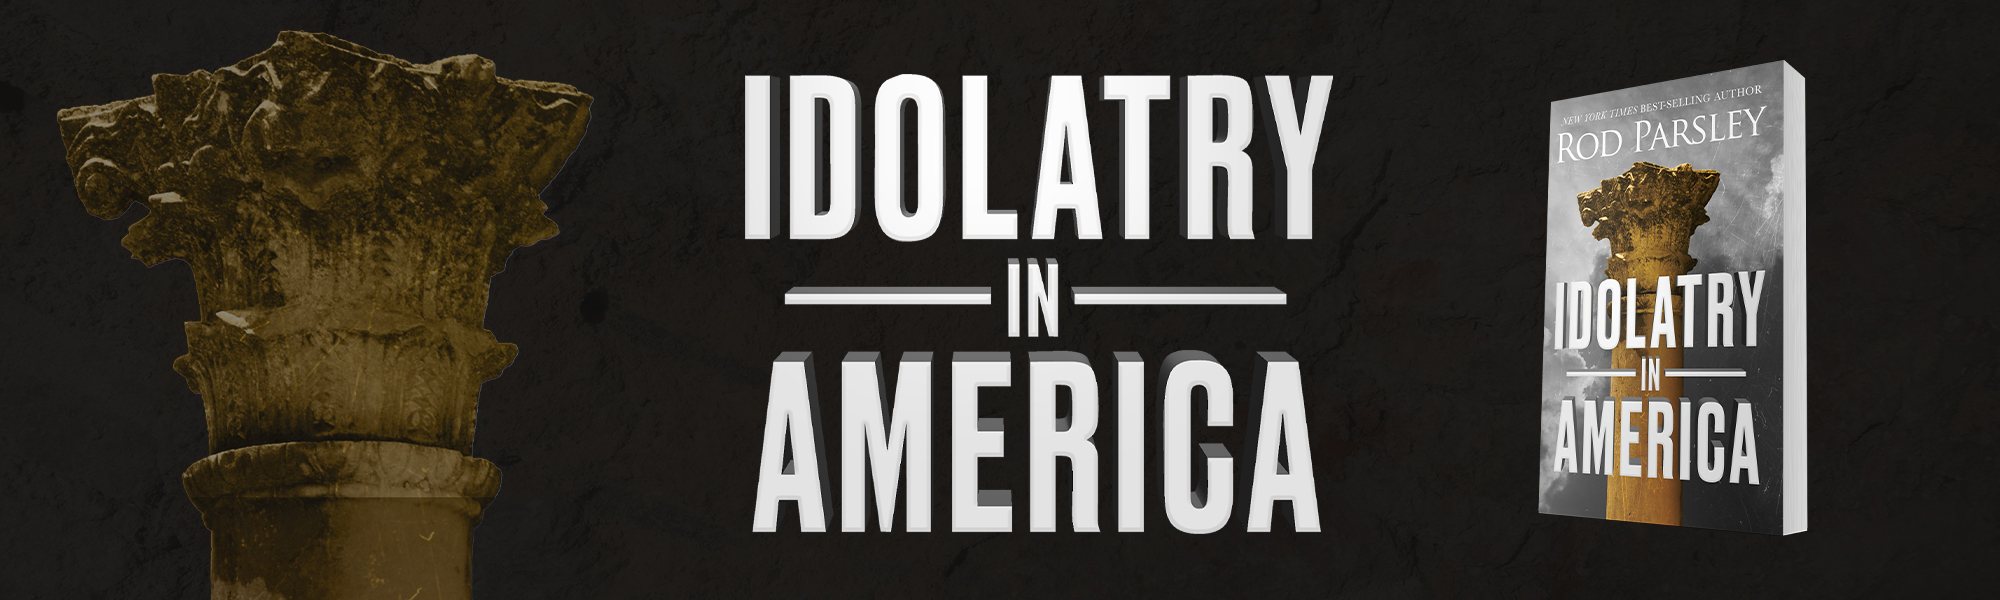 Idolatry in America